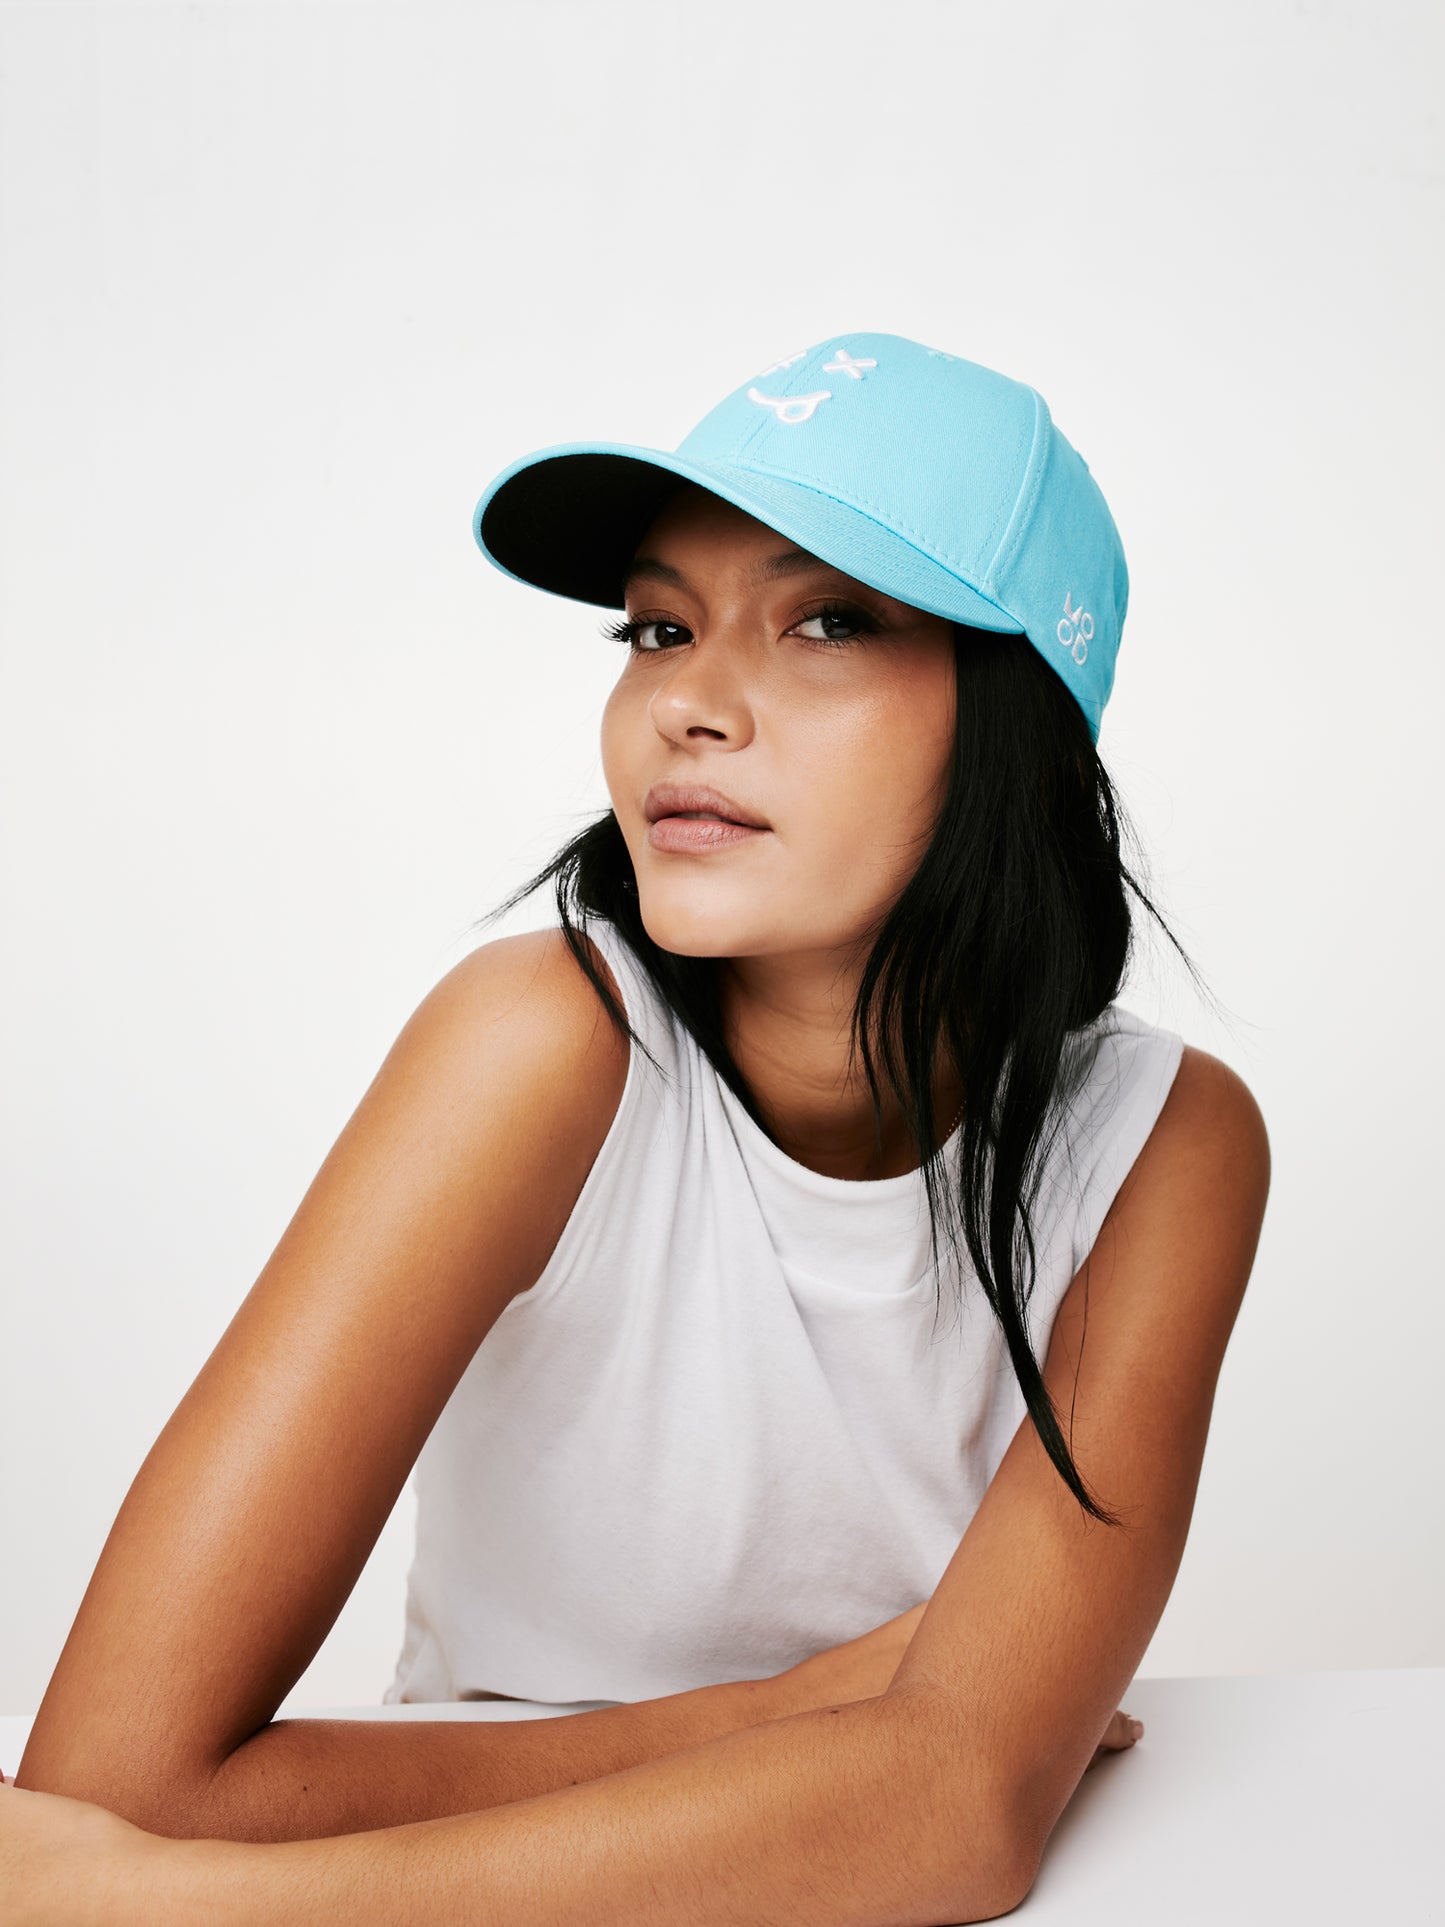 MOOD female model wearing XX baseball cap in paradise blue